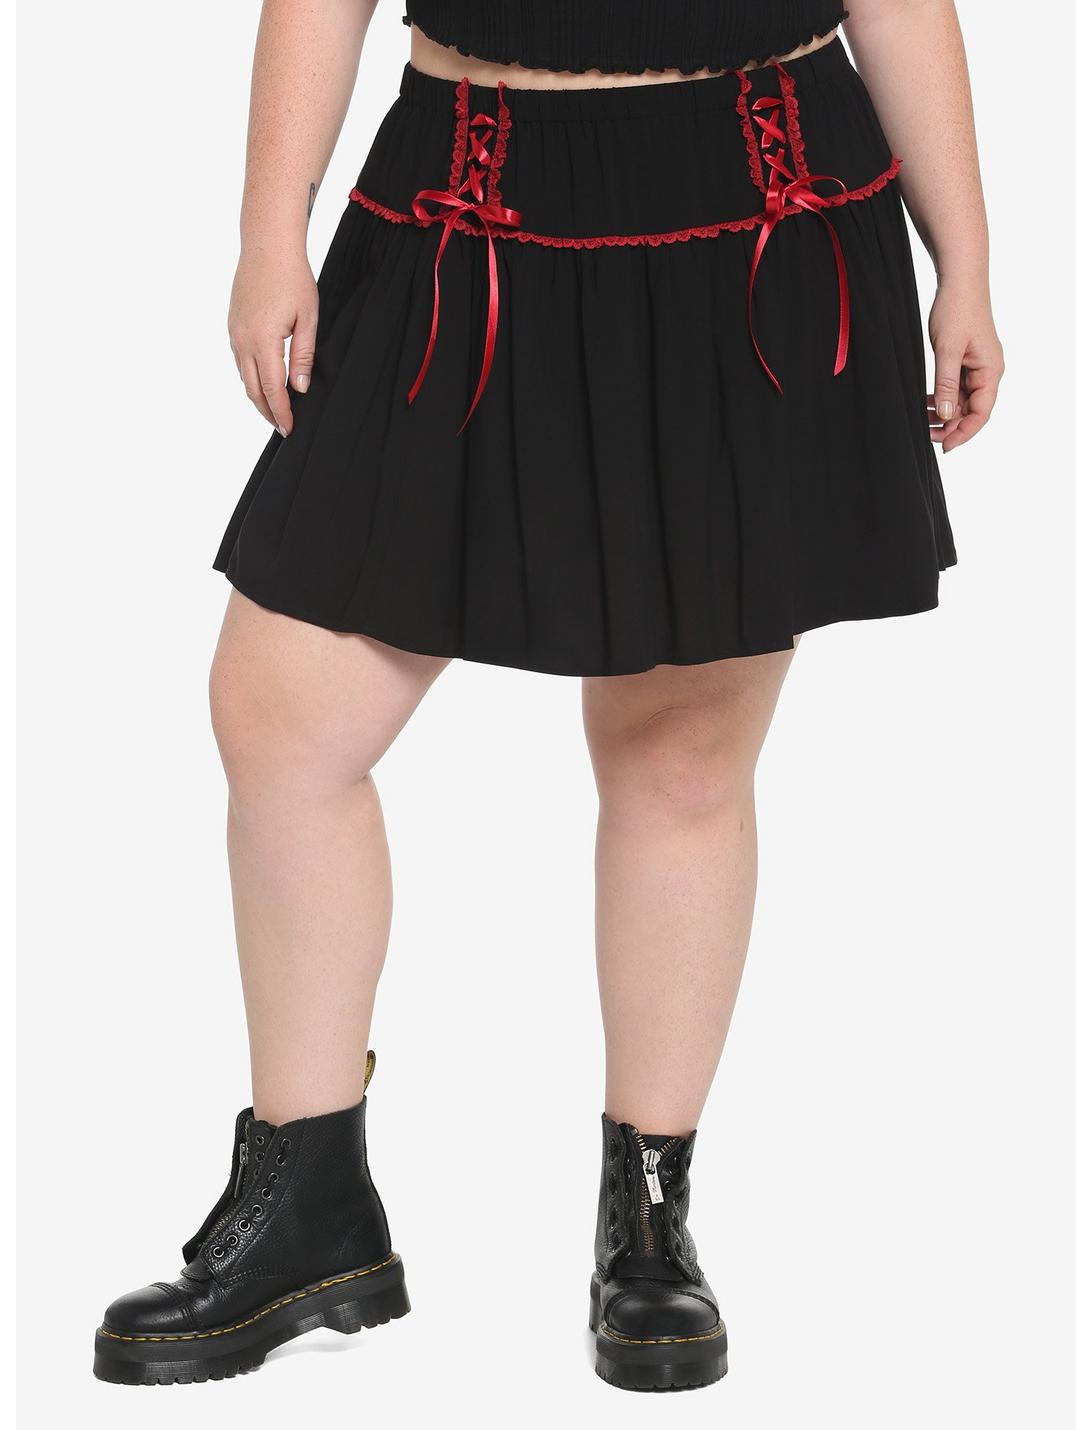 Black & Red Lace-Up Skirt Plus Size, BLACK, hi-res